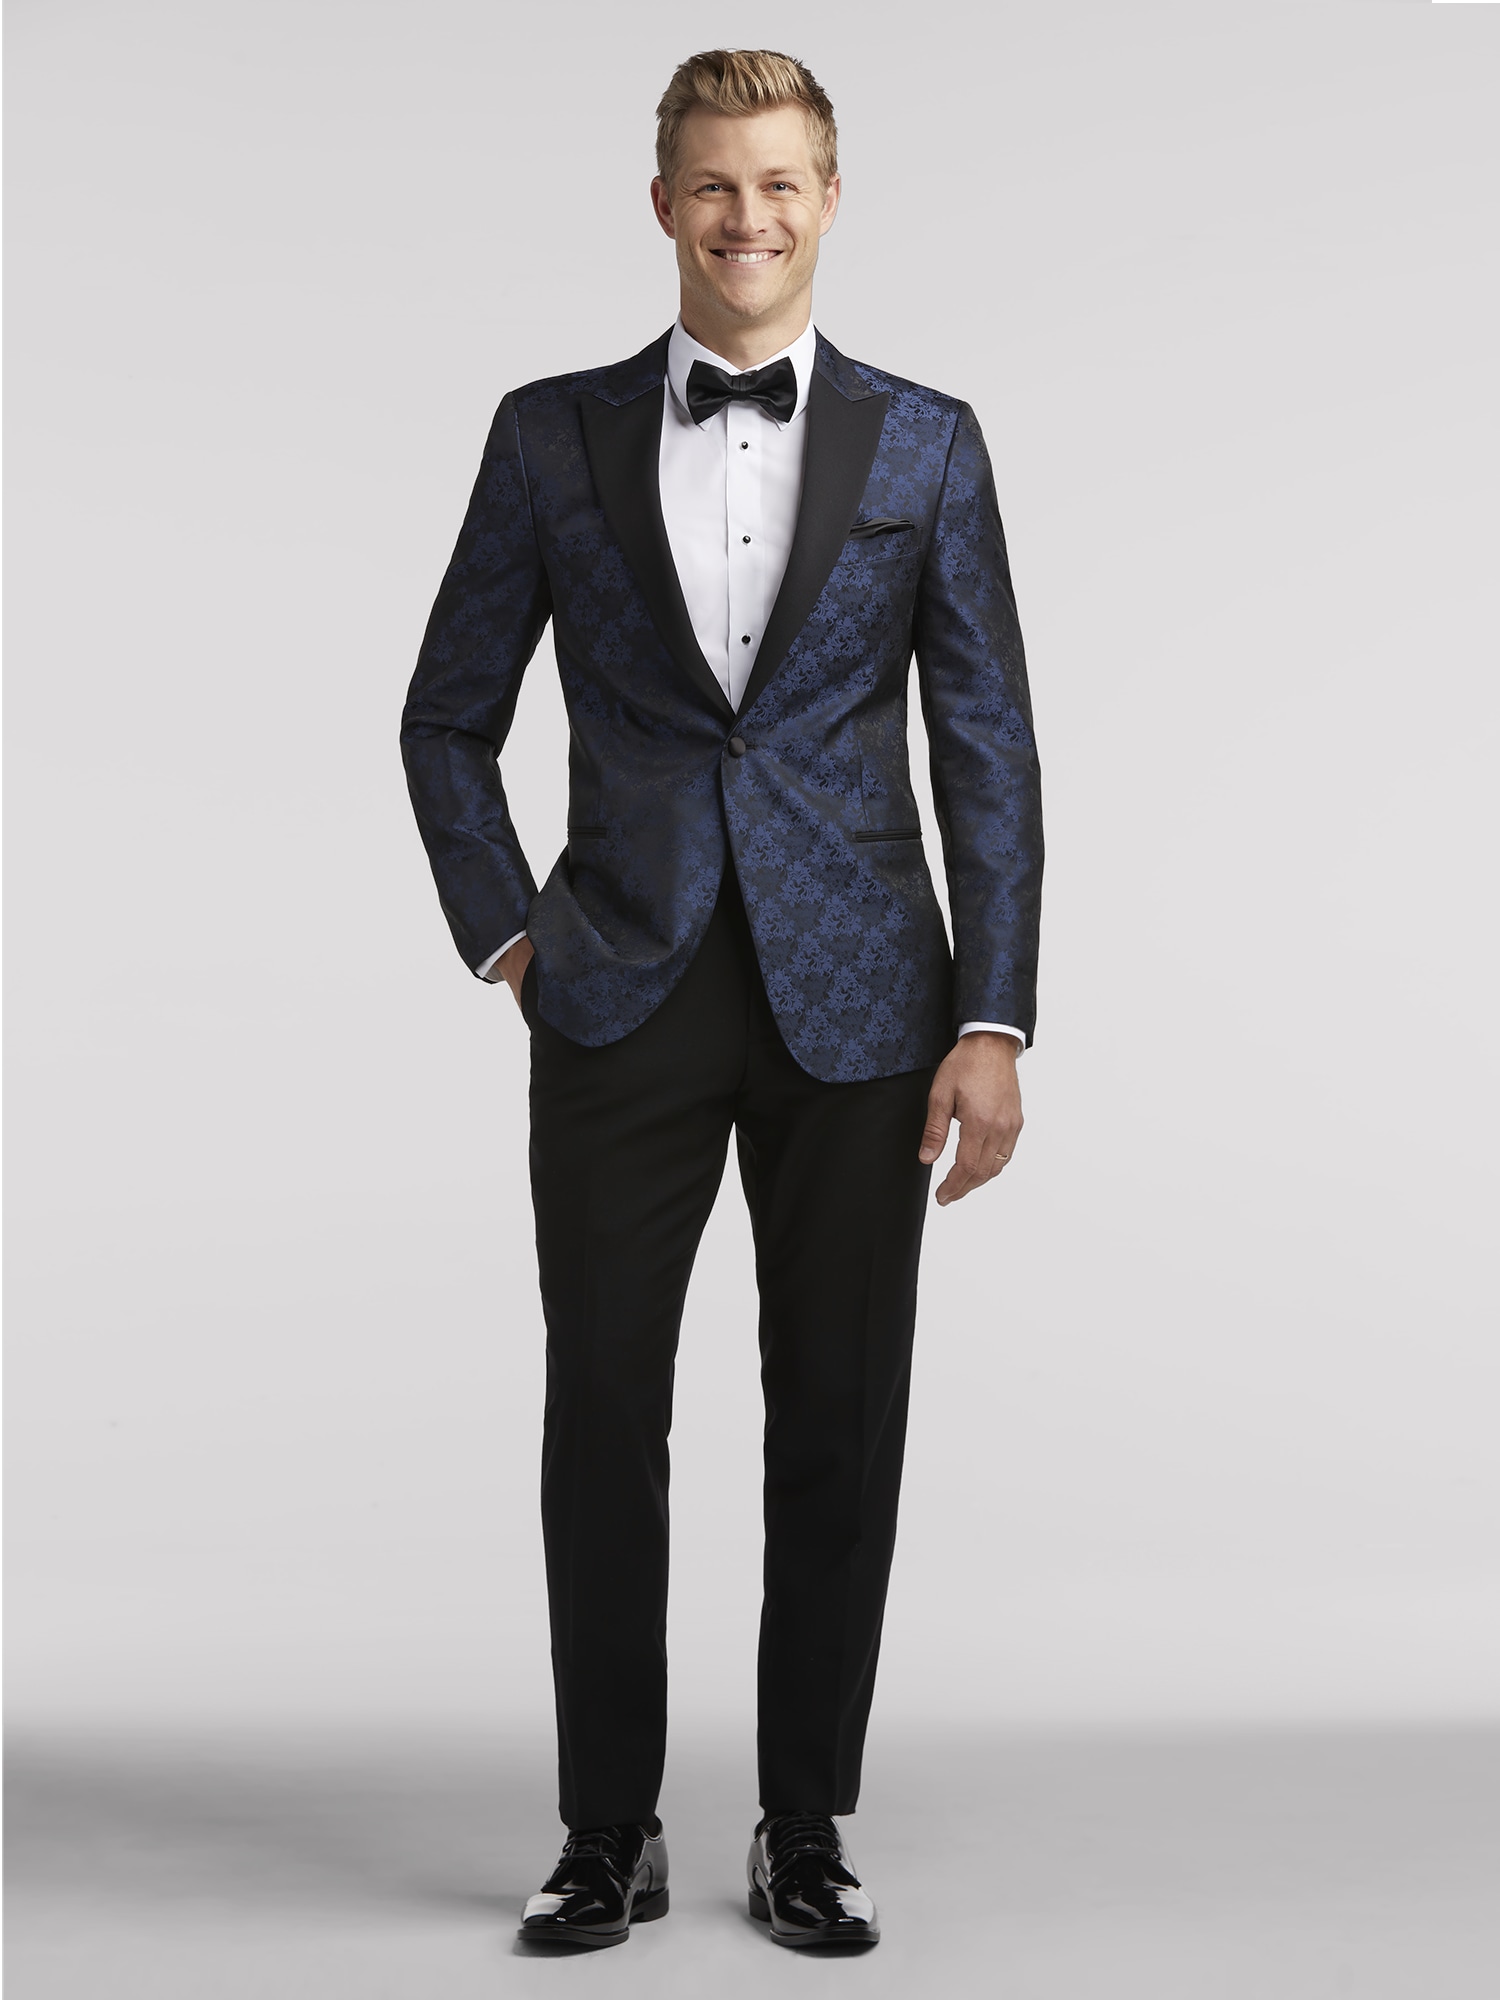 Boy Suit Dark Blue Velvet Jacket And Black Pants Formal Wedding Suit Dinner  Suit